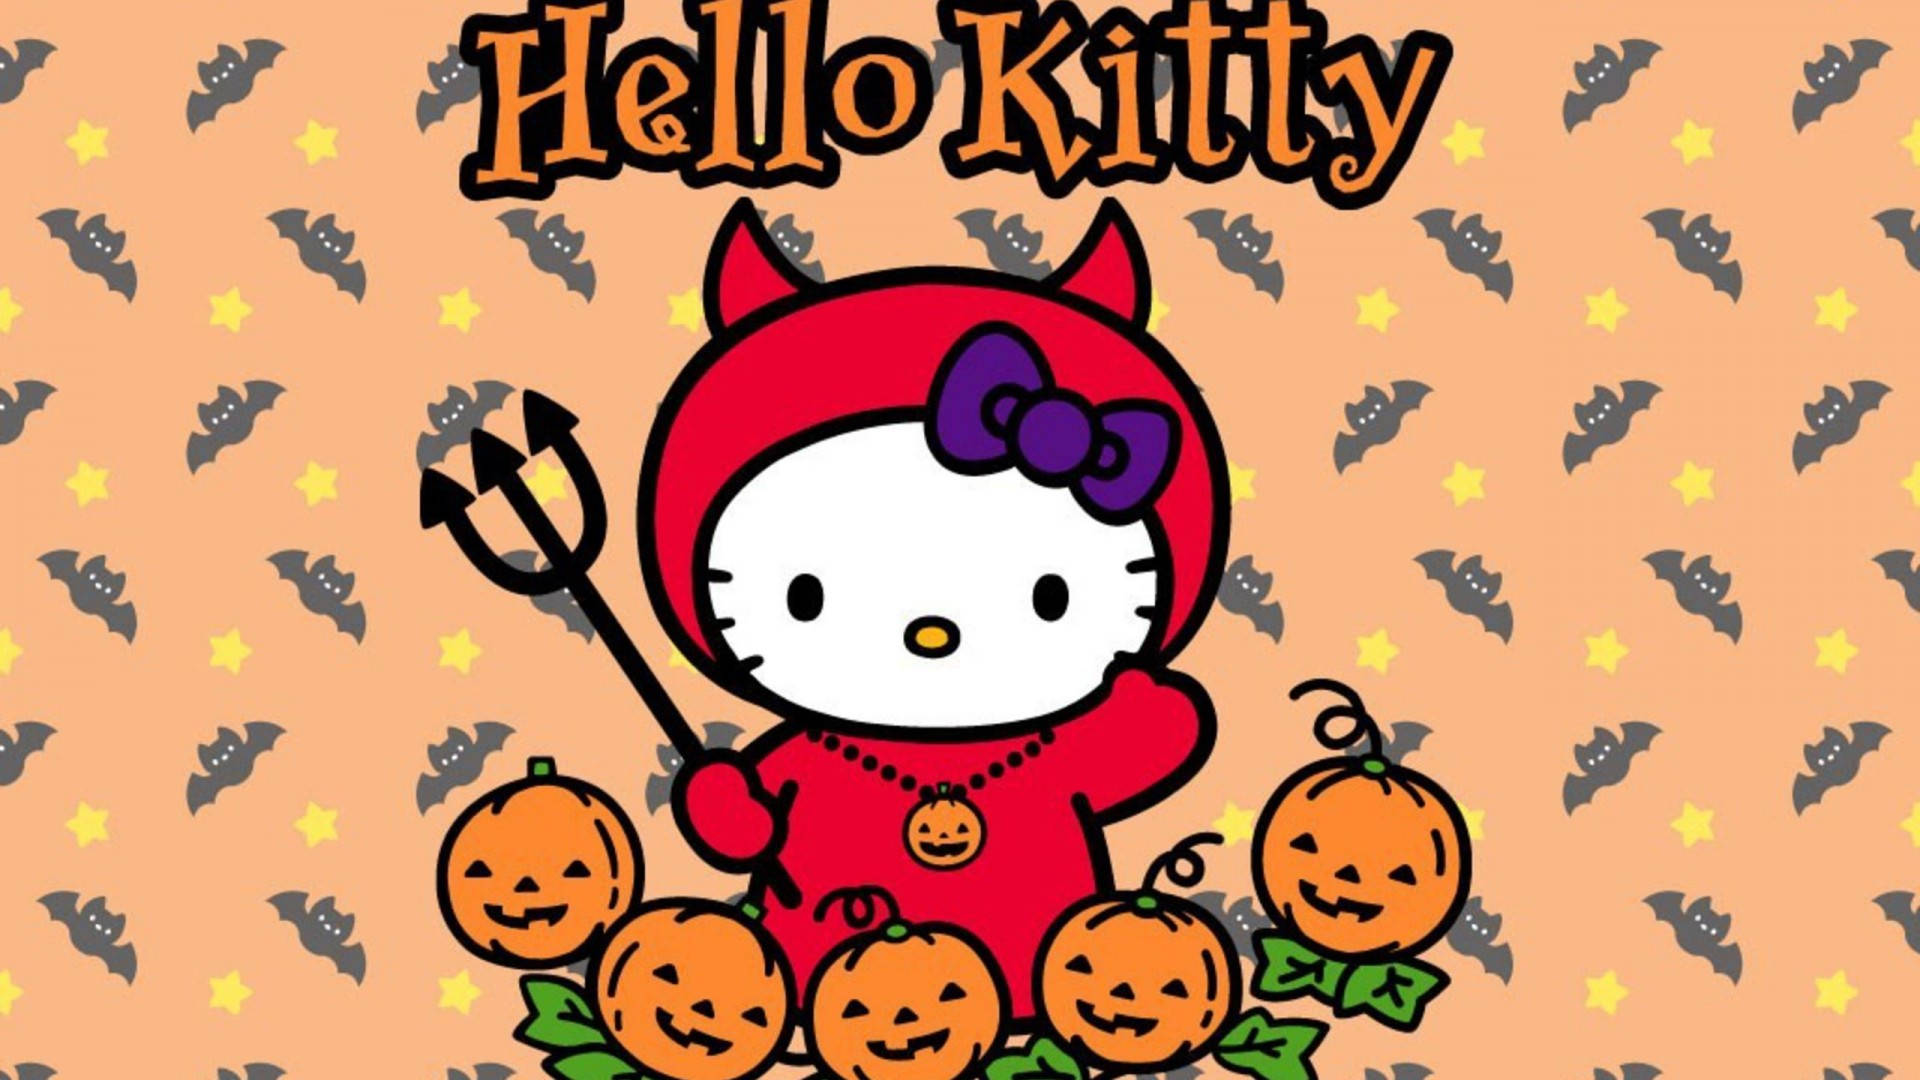 Download Hello Kitty Halloween Red Devil Wallpaper